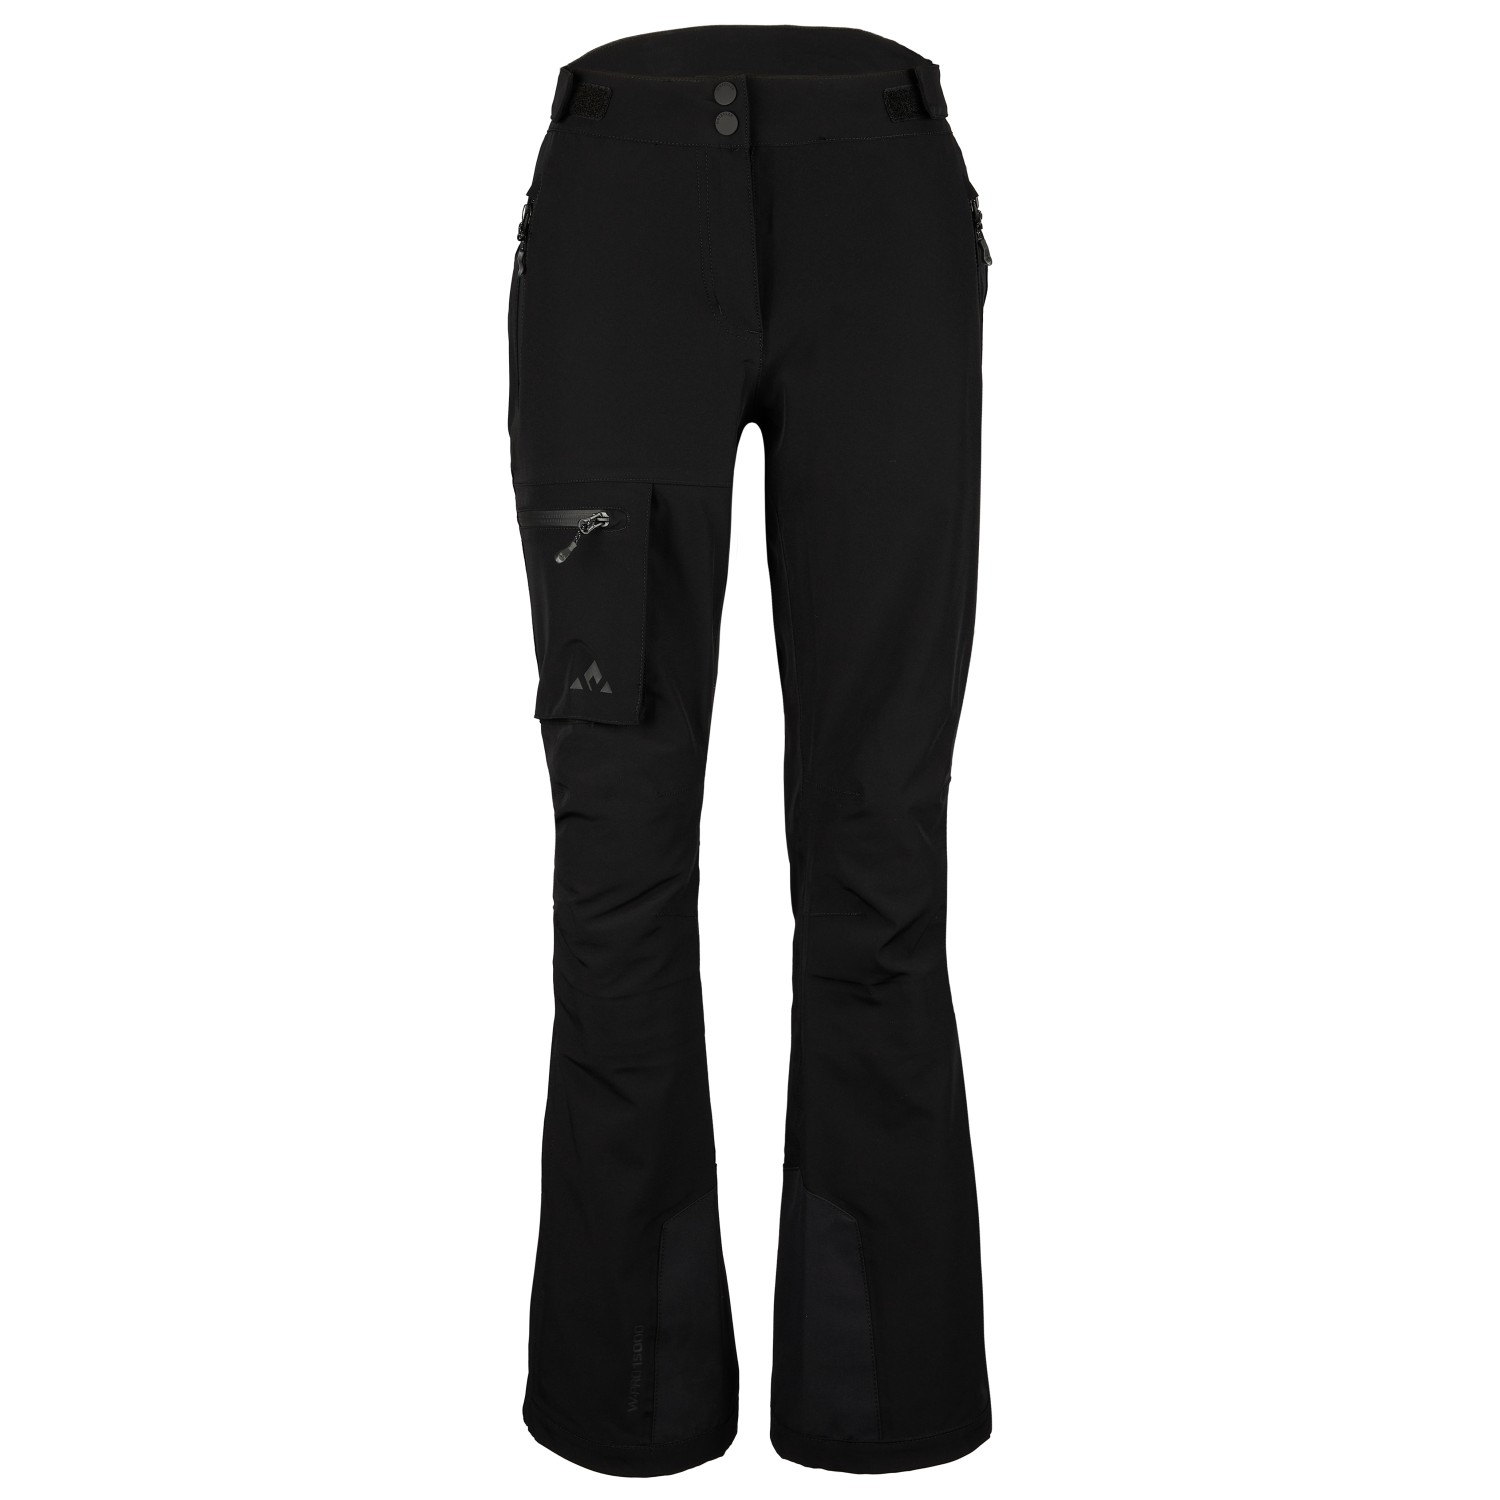 Лыжные штаны Whistler Women's Maze LayerTech Ski W Pro 15000, черный цена и фото